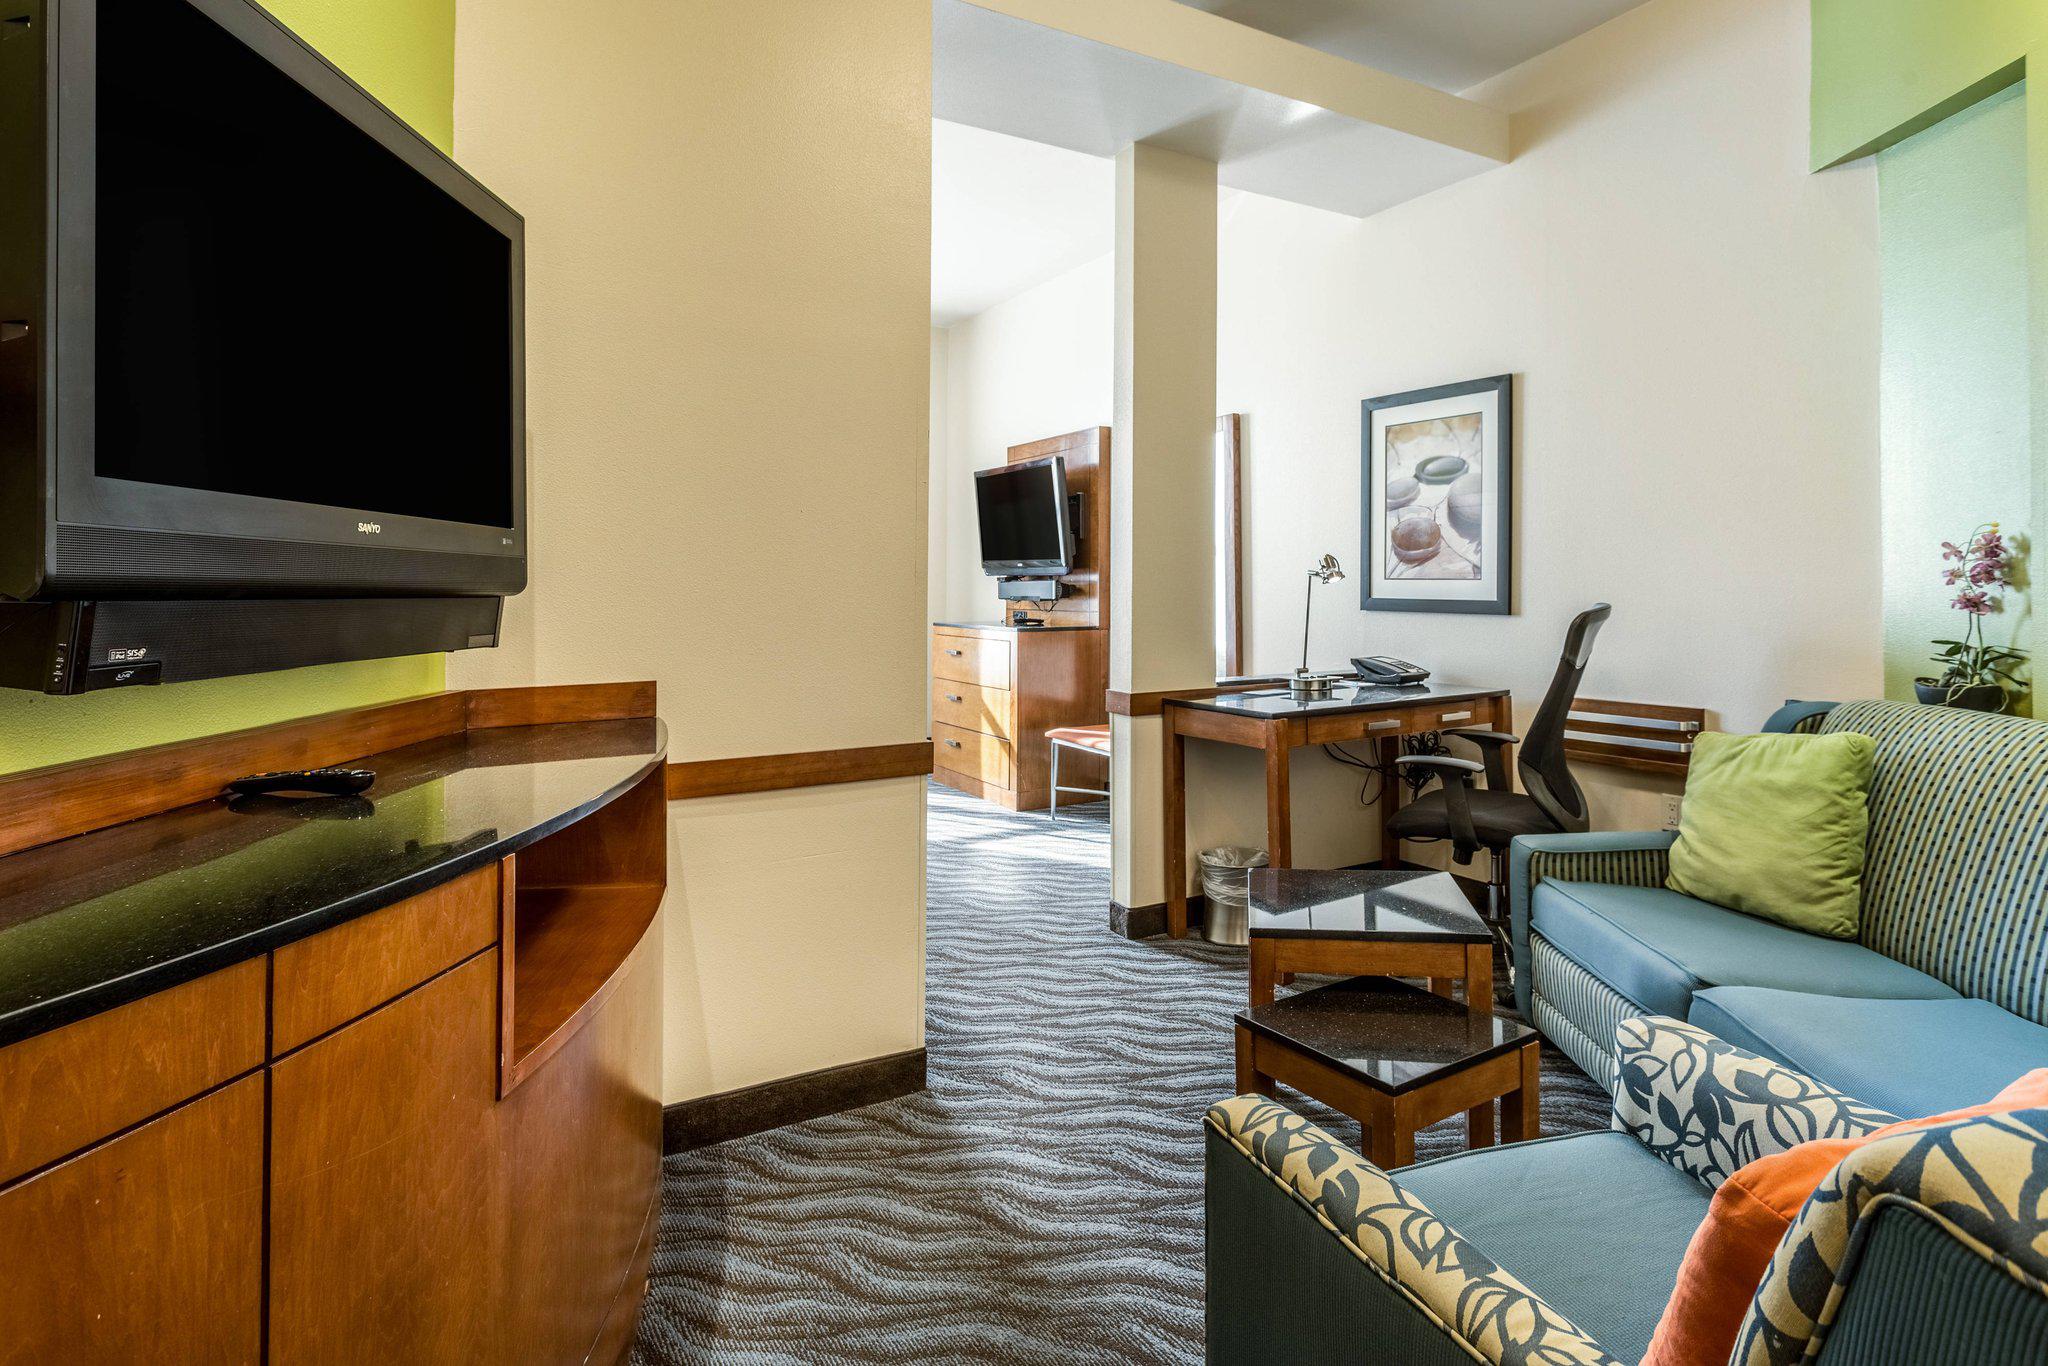 Fairfield Inn & Suites by Marriott Alamogordo Photo